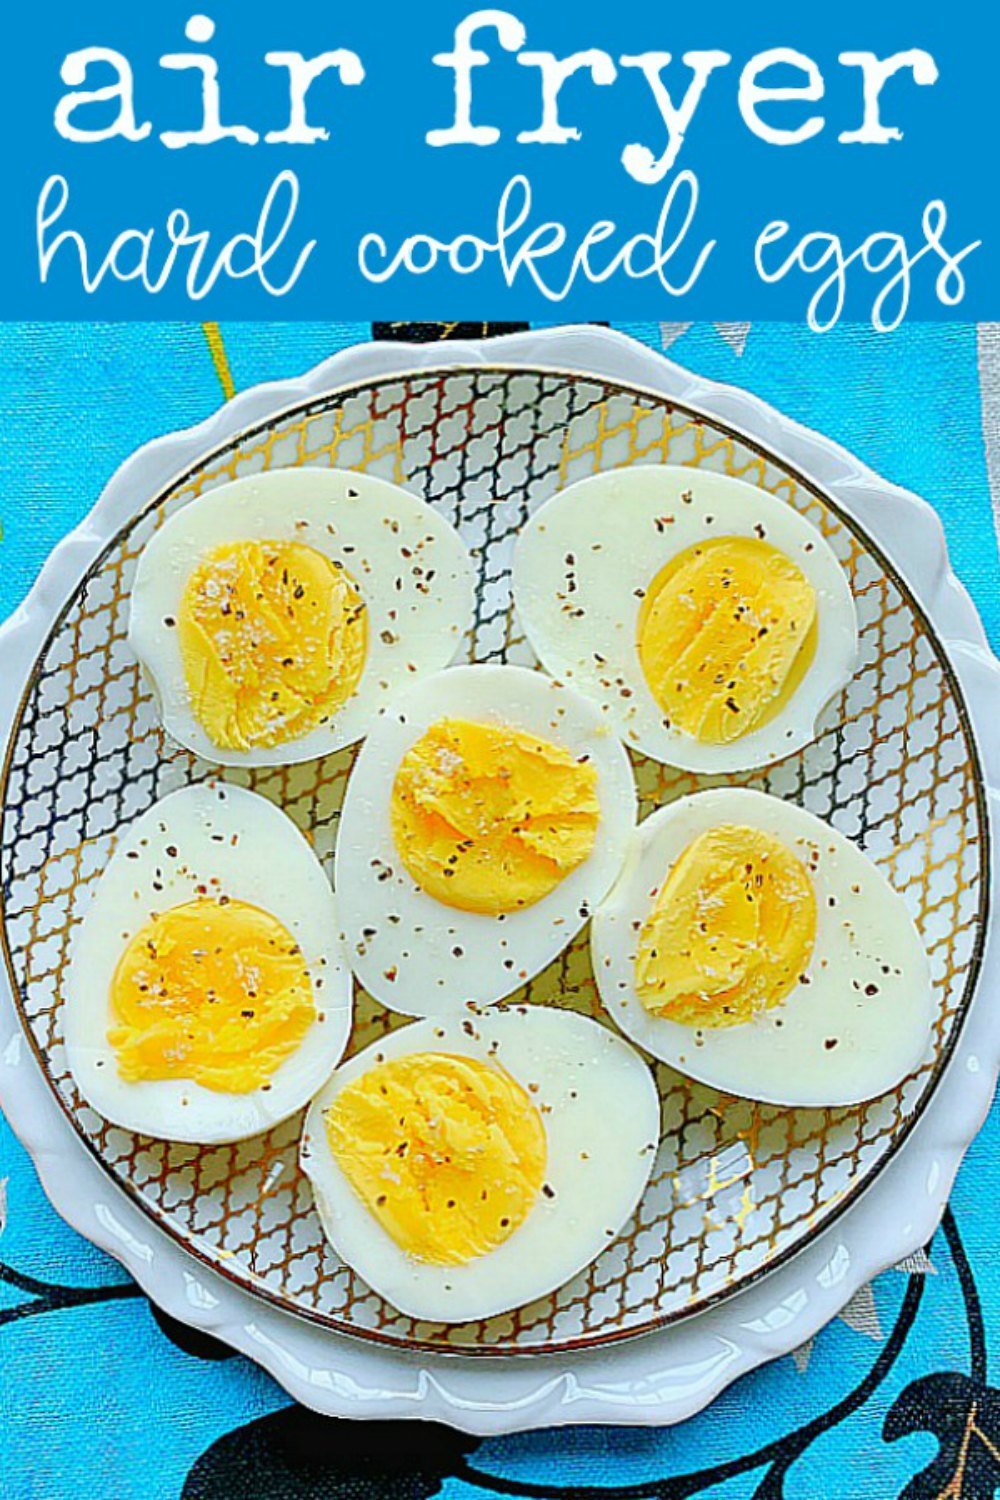 Air Fryer Eggs | Foodtastic Mom #airfryereggs #hardcookedeggs #hardboiledeggs #airfryerrecipes